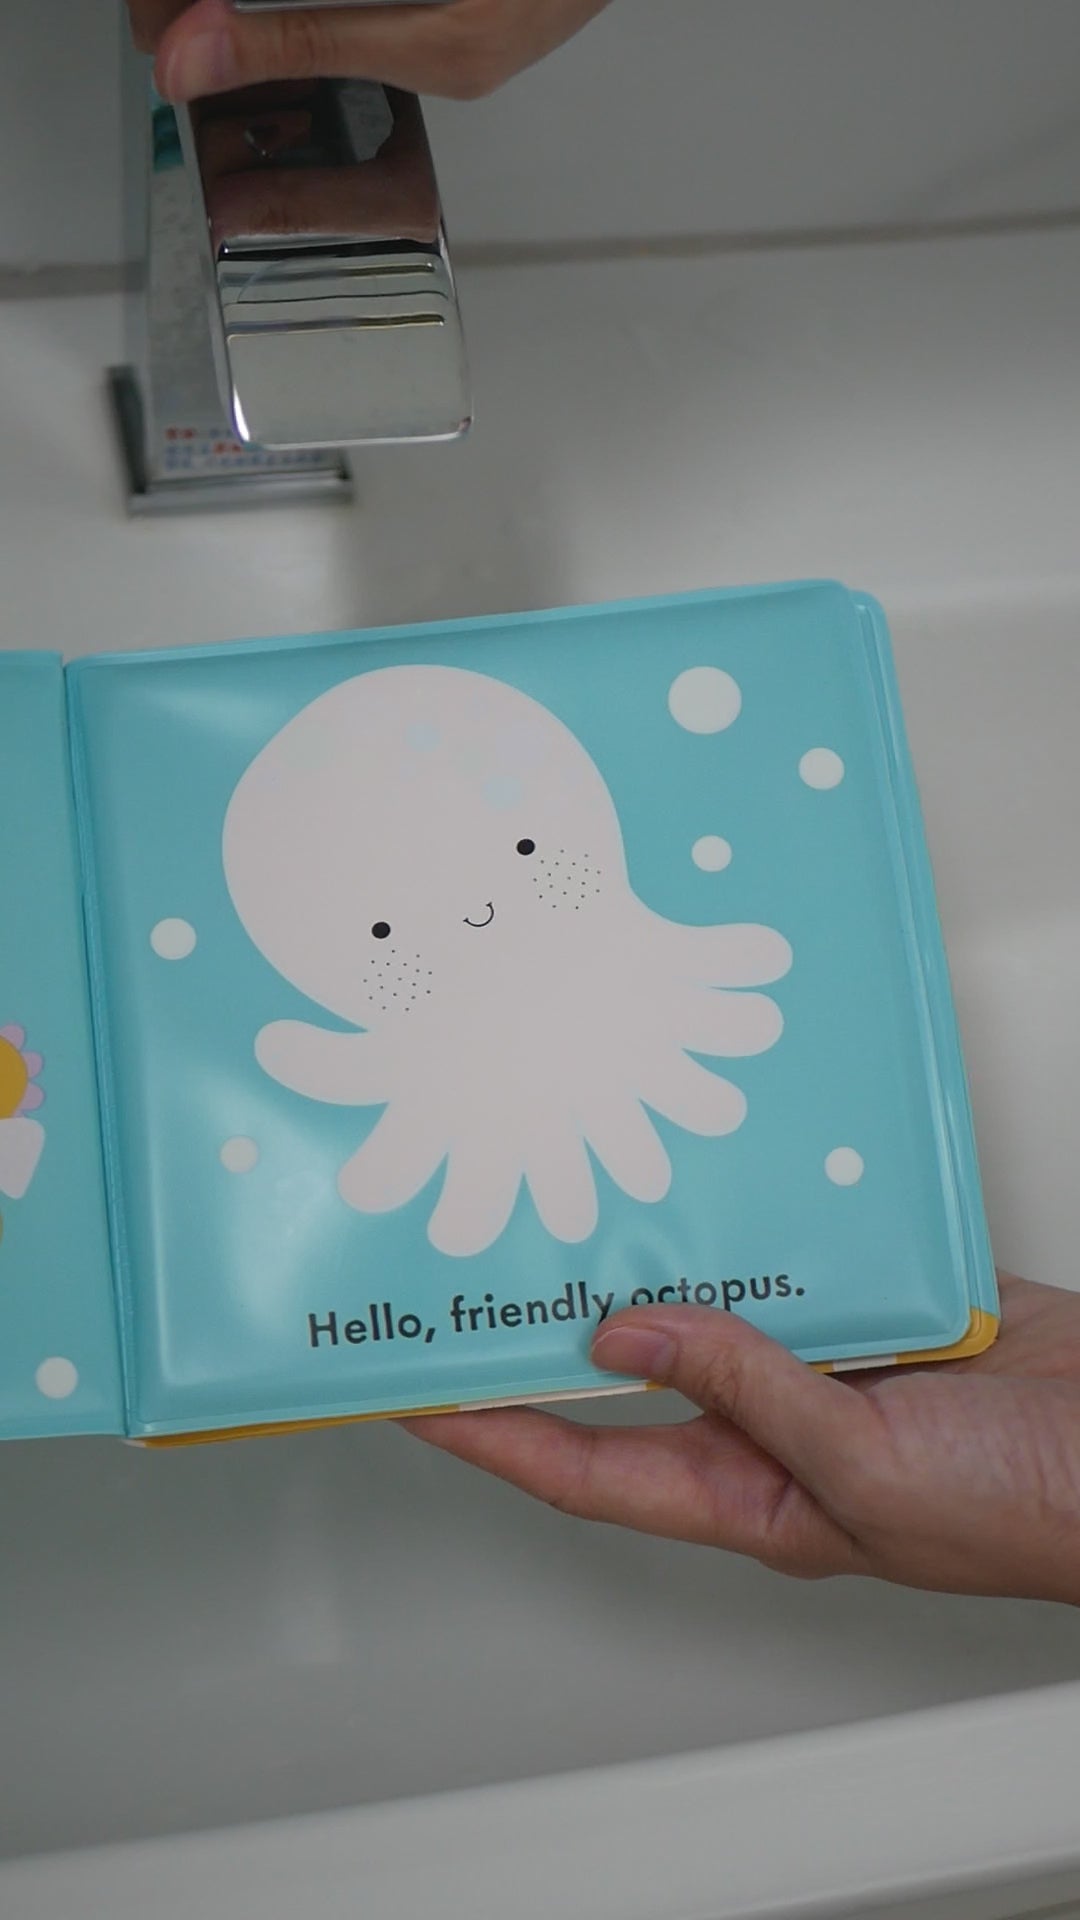 Baby Touch | My Magic Bath Book